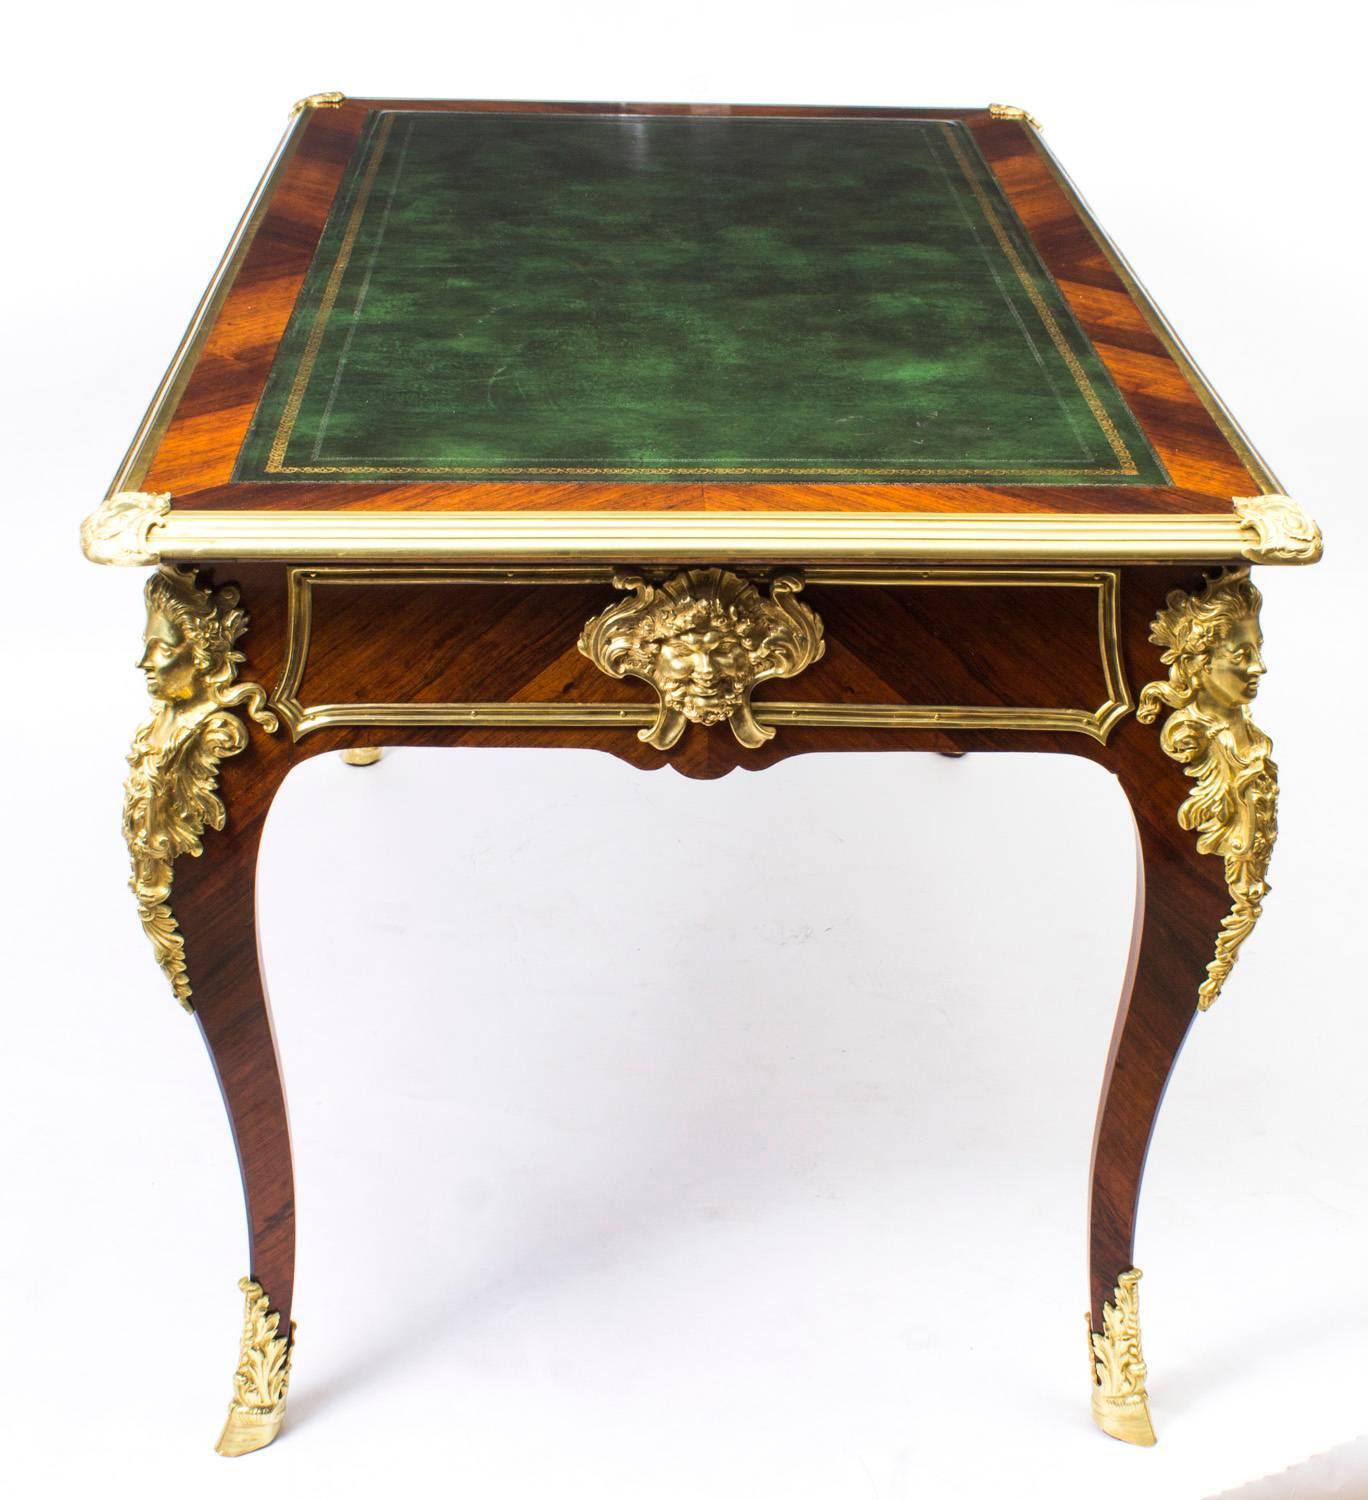 19th Century French Ormolu-Mounted Louis Revival Bureau Plat Desk 4